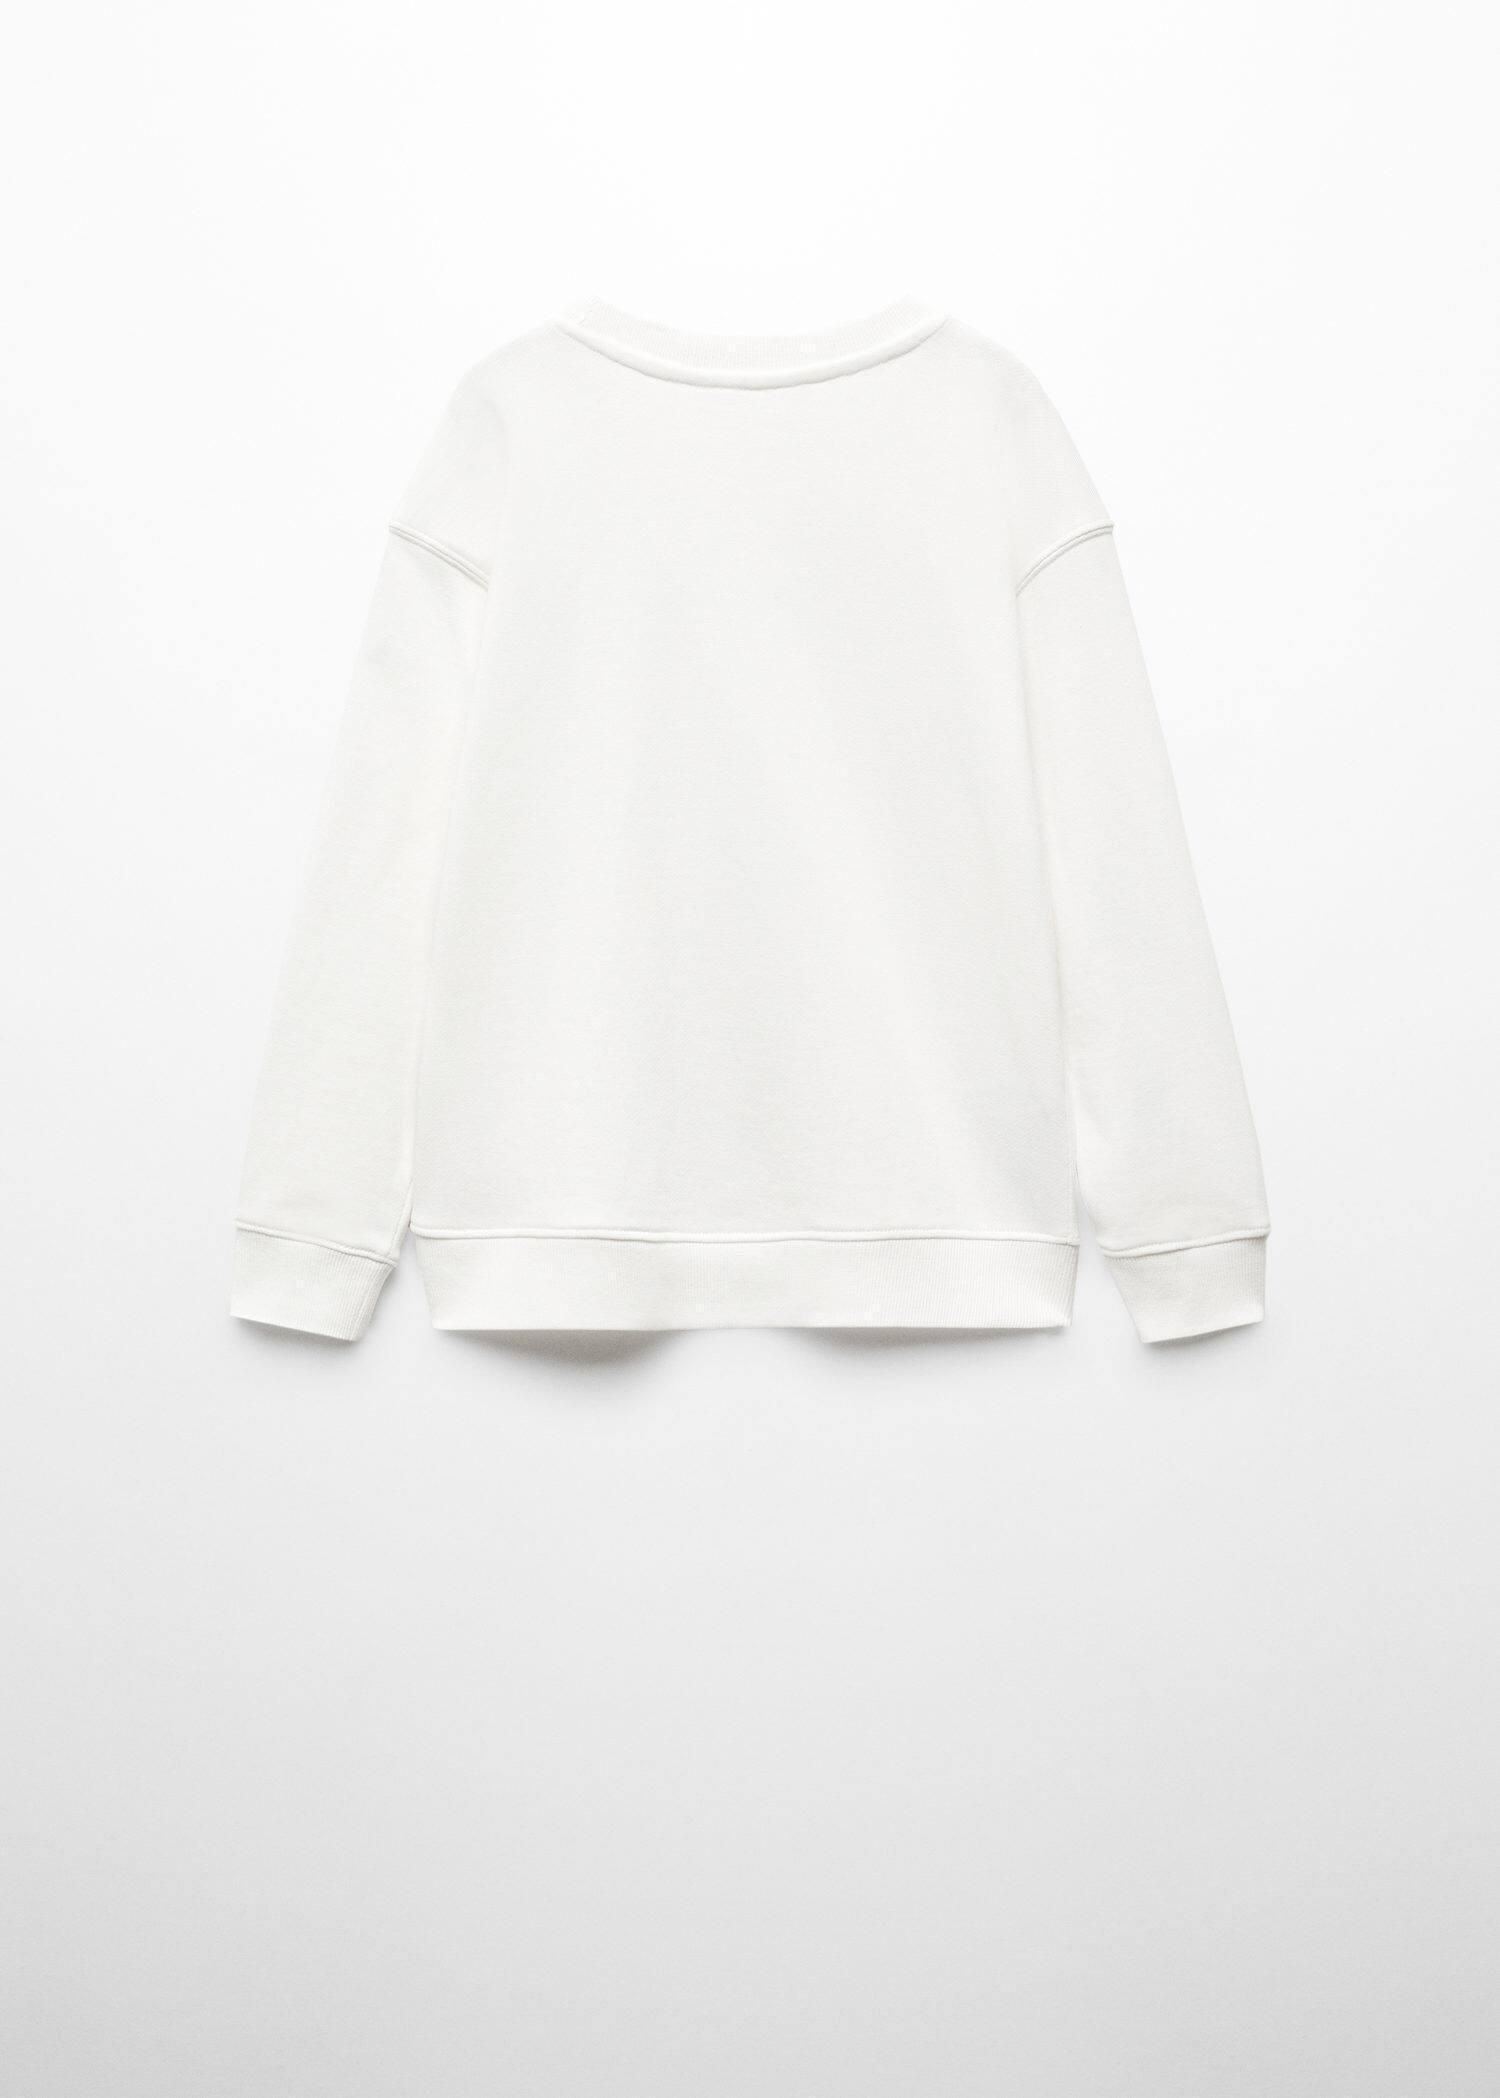 Mango - White Message Cotton Sweatshirt, Kids Boys